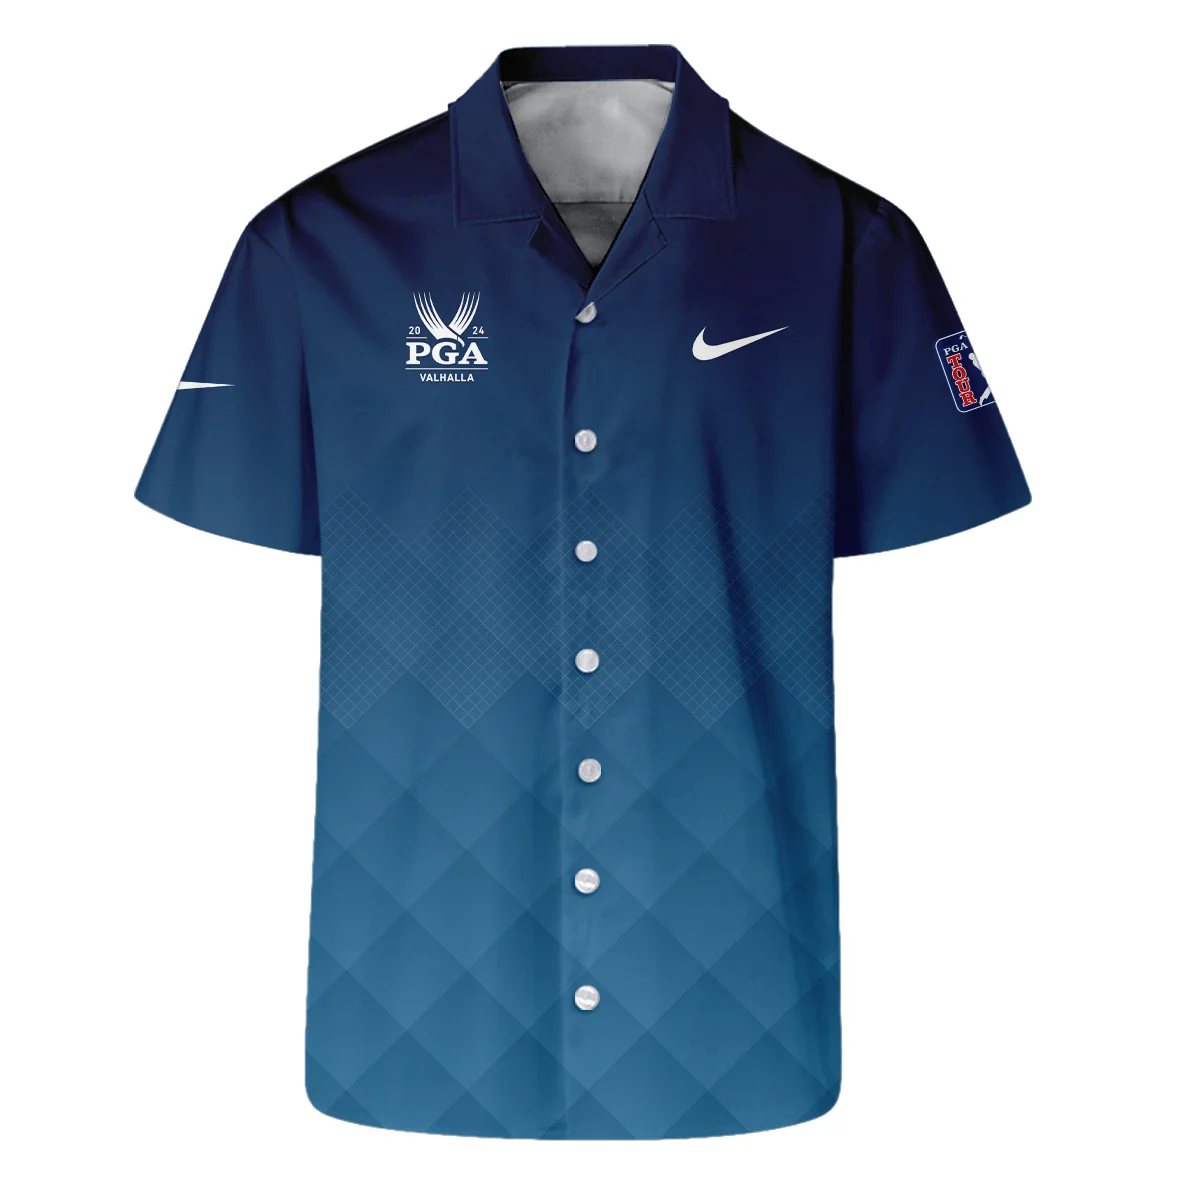 2024 PGA Championship Valhalla Nike Blue Gradient Abstract Stripes  Bomber Jacket Style Classic Bomber Jacket